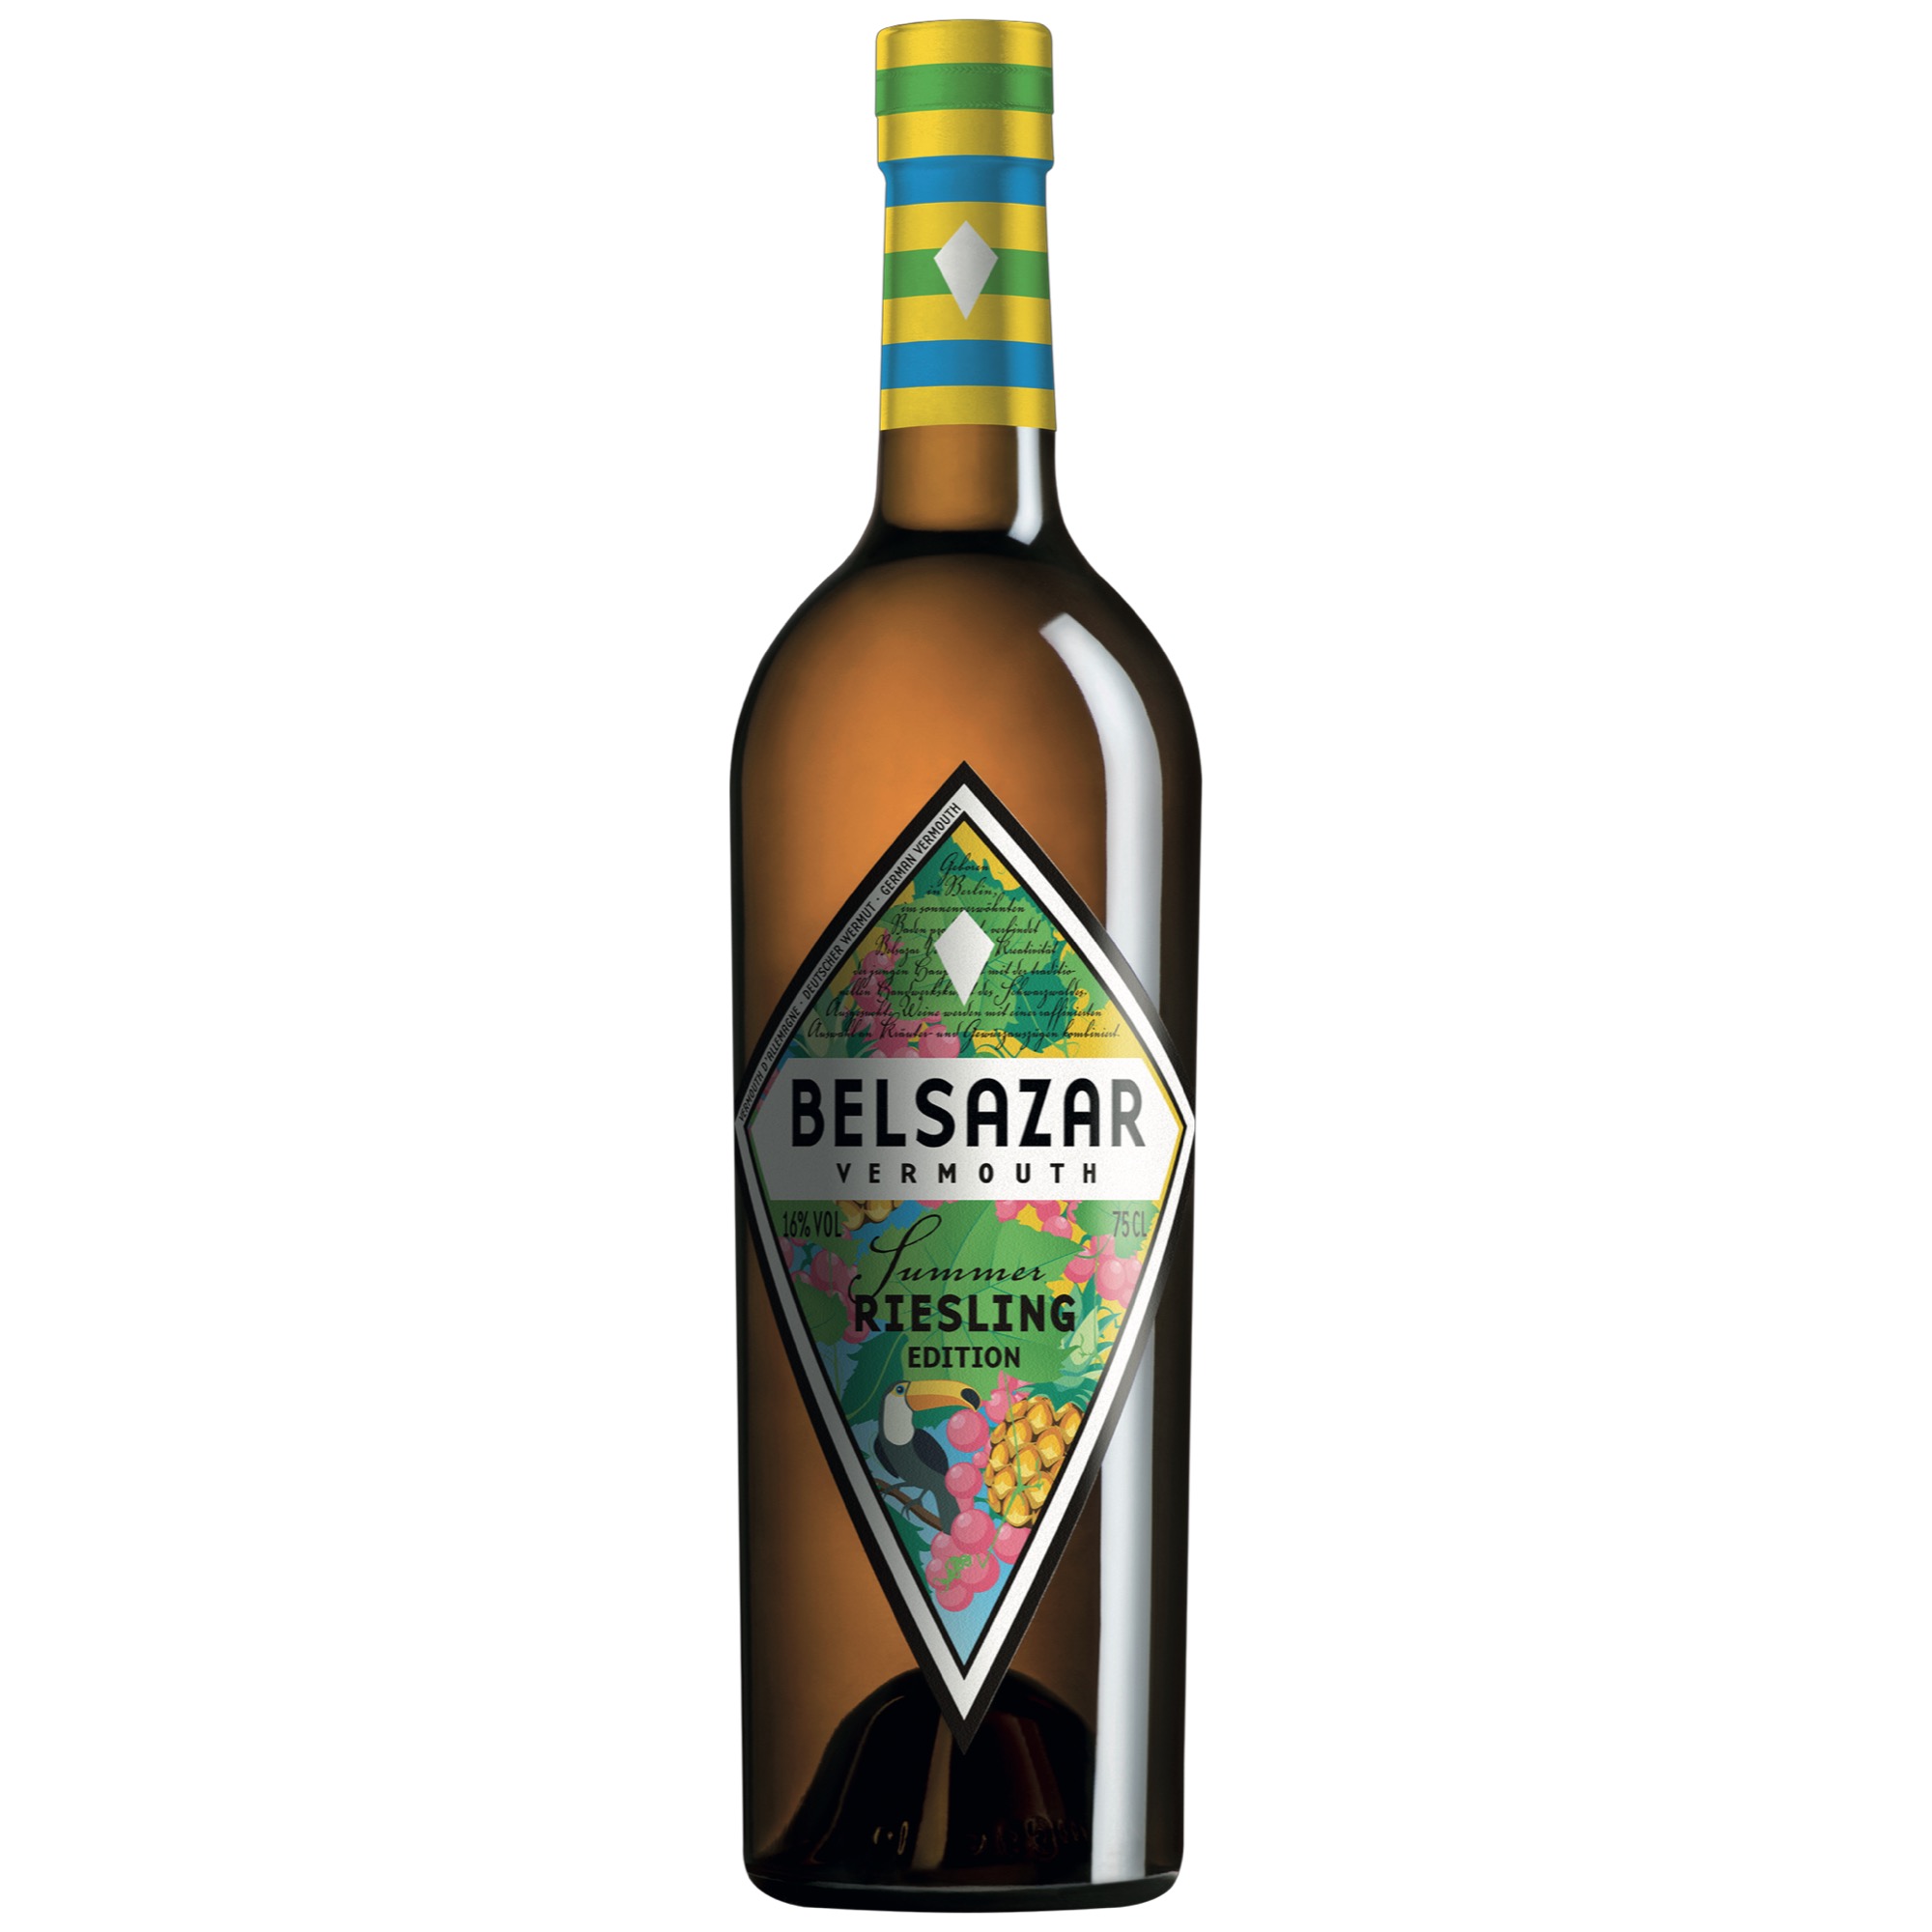 Belsazar Vermouth 0,75l, Riesling